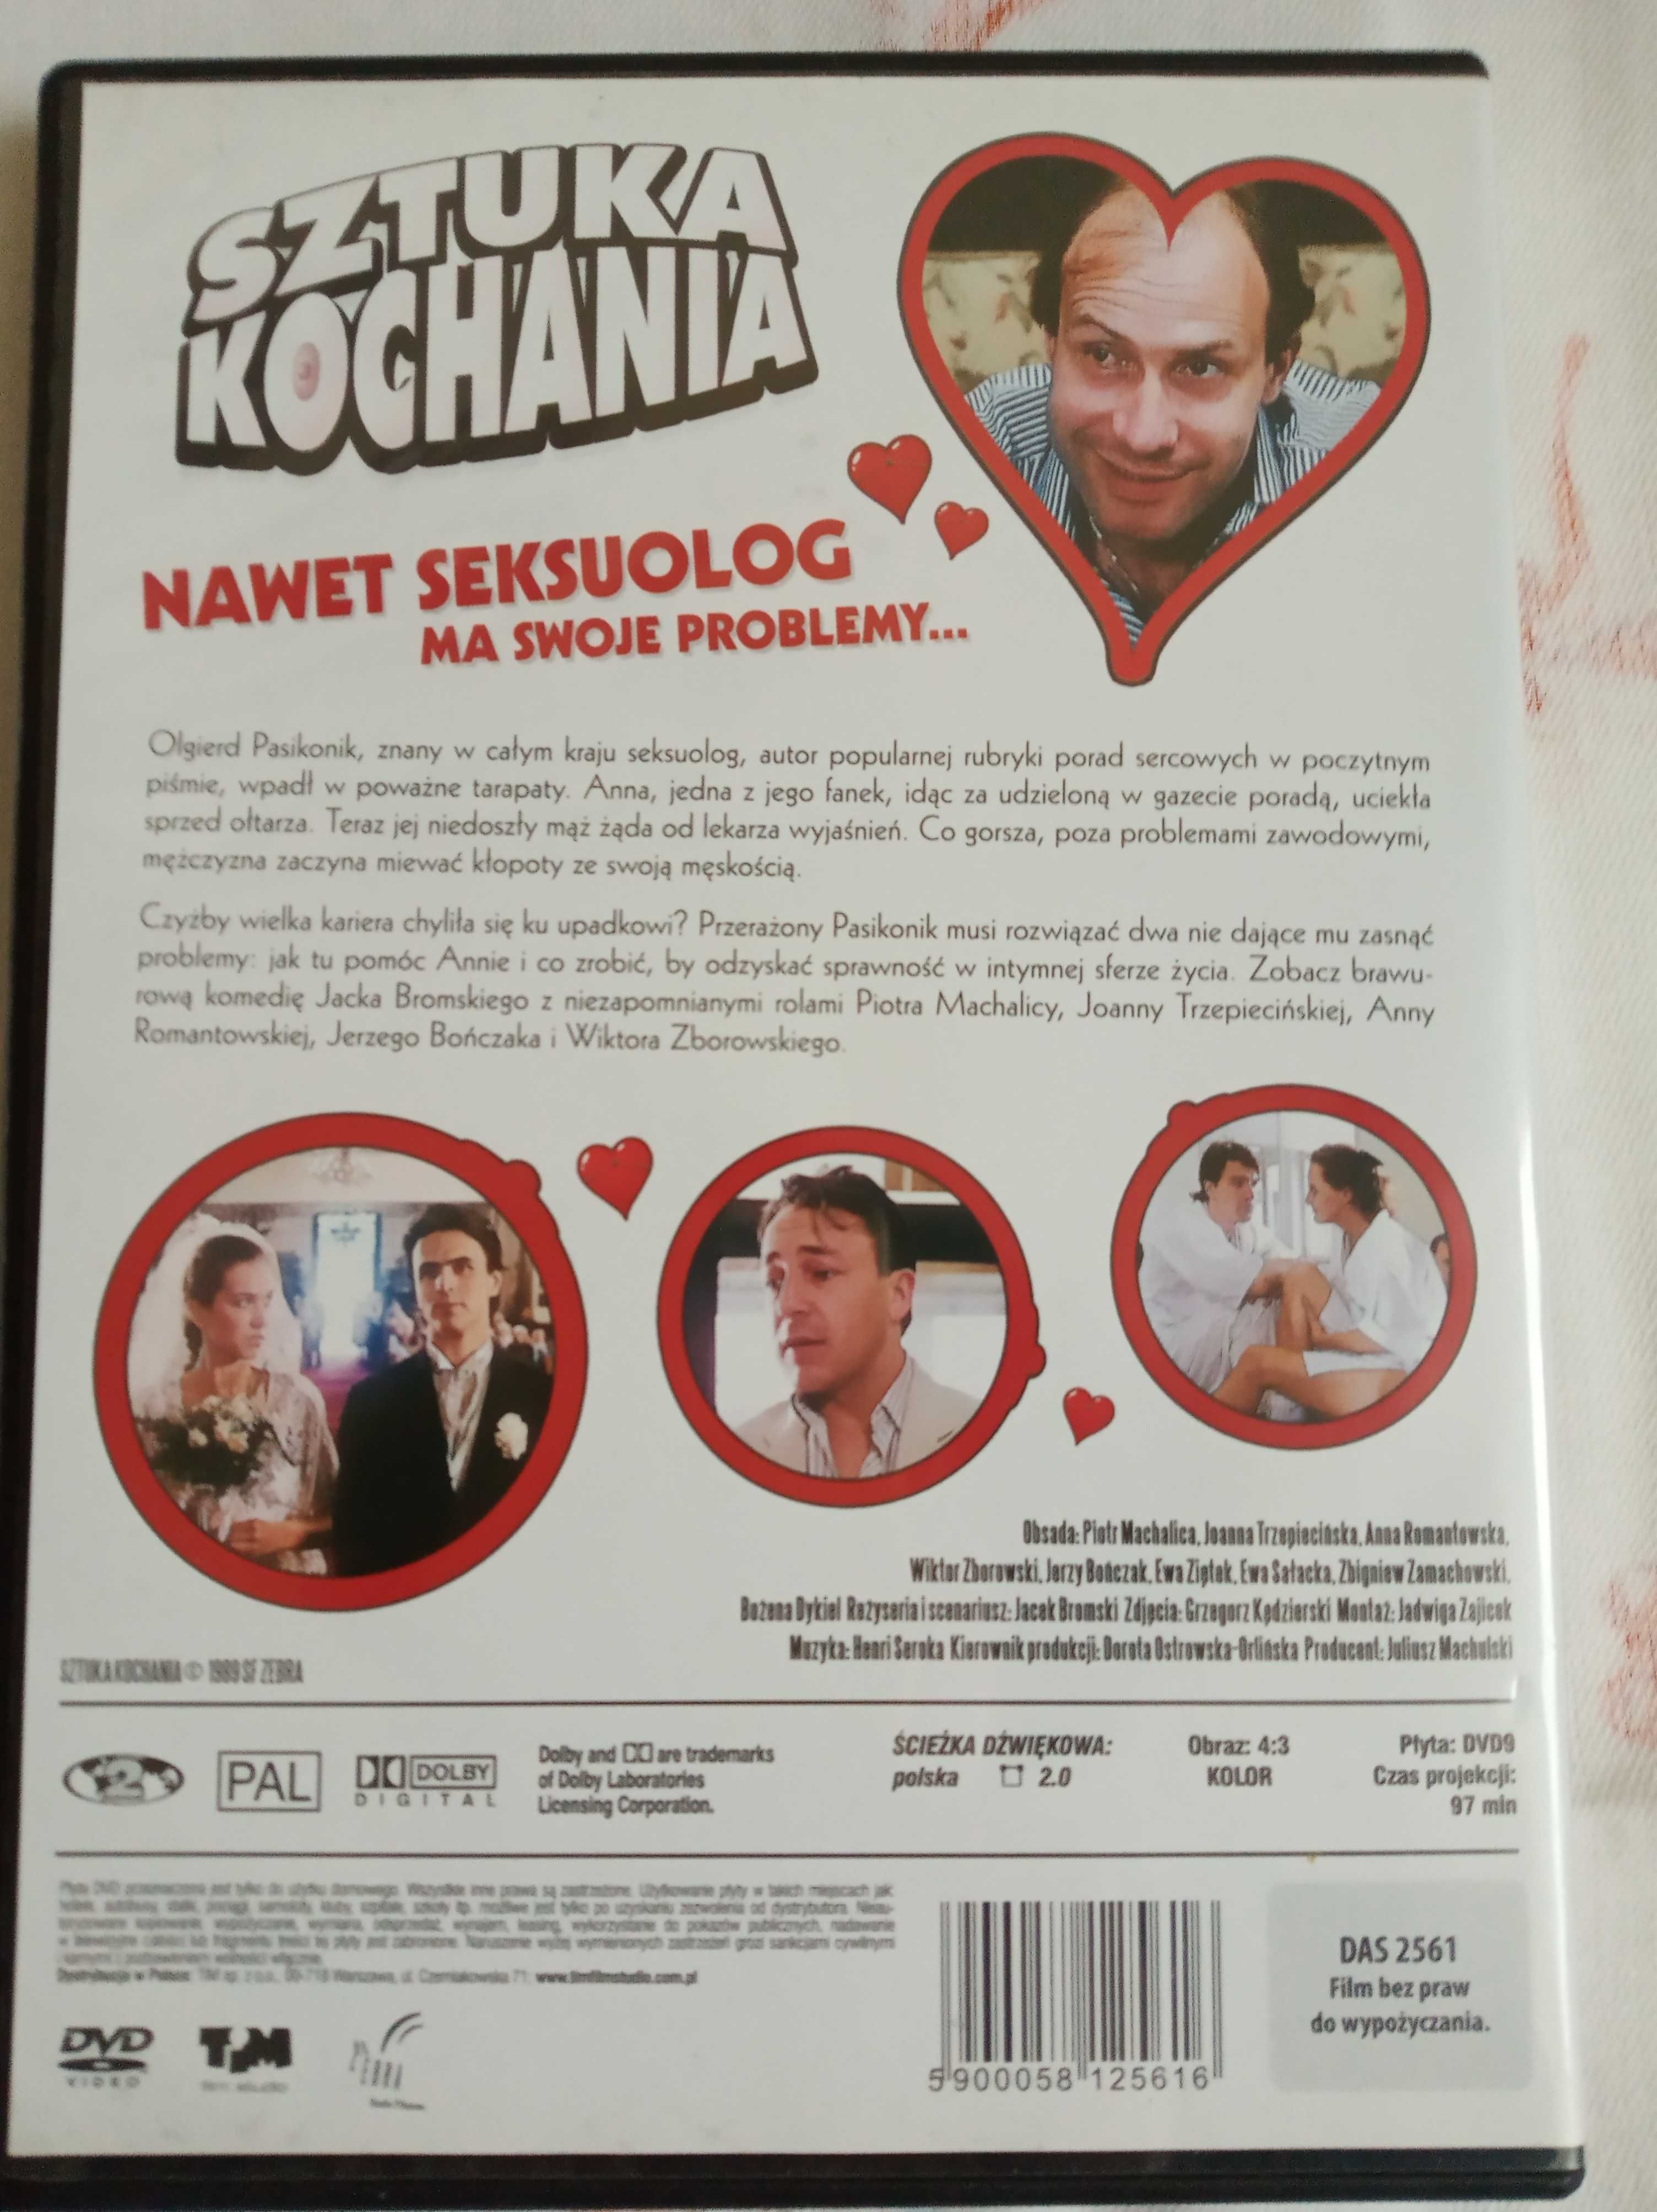 DVD "Sztuka kochania" - polska komedia reż. Jacek Bromski